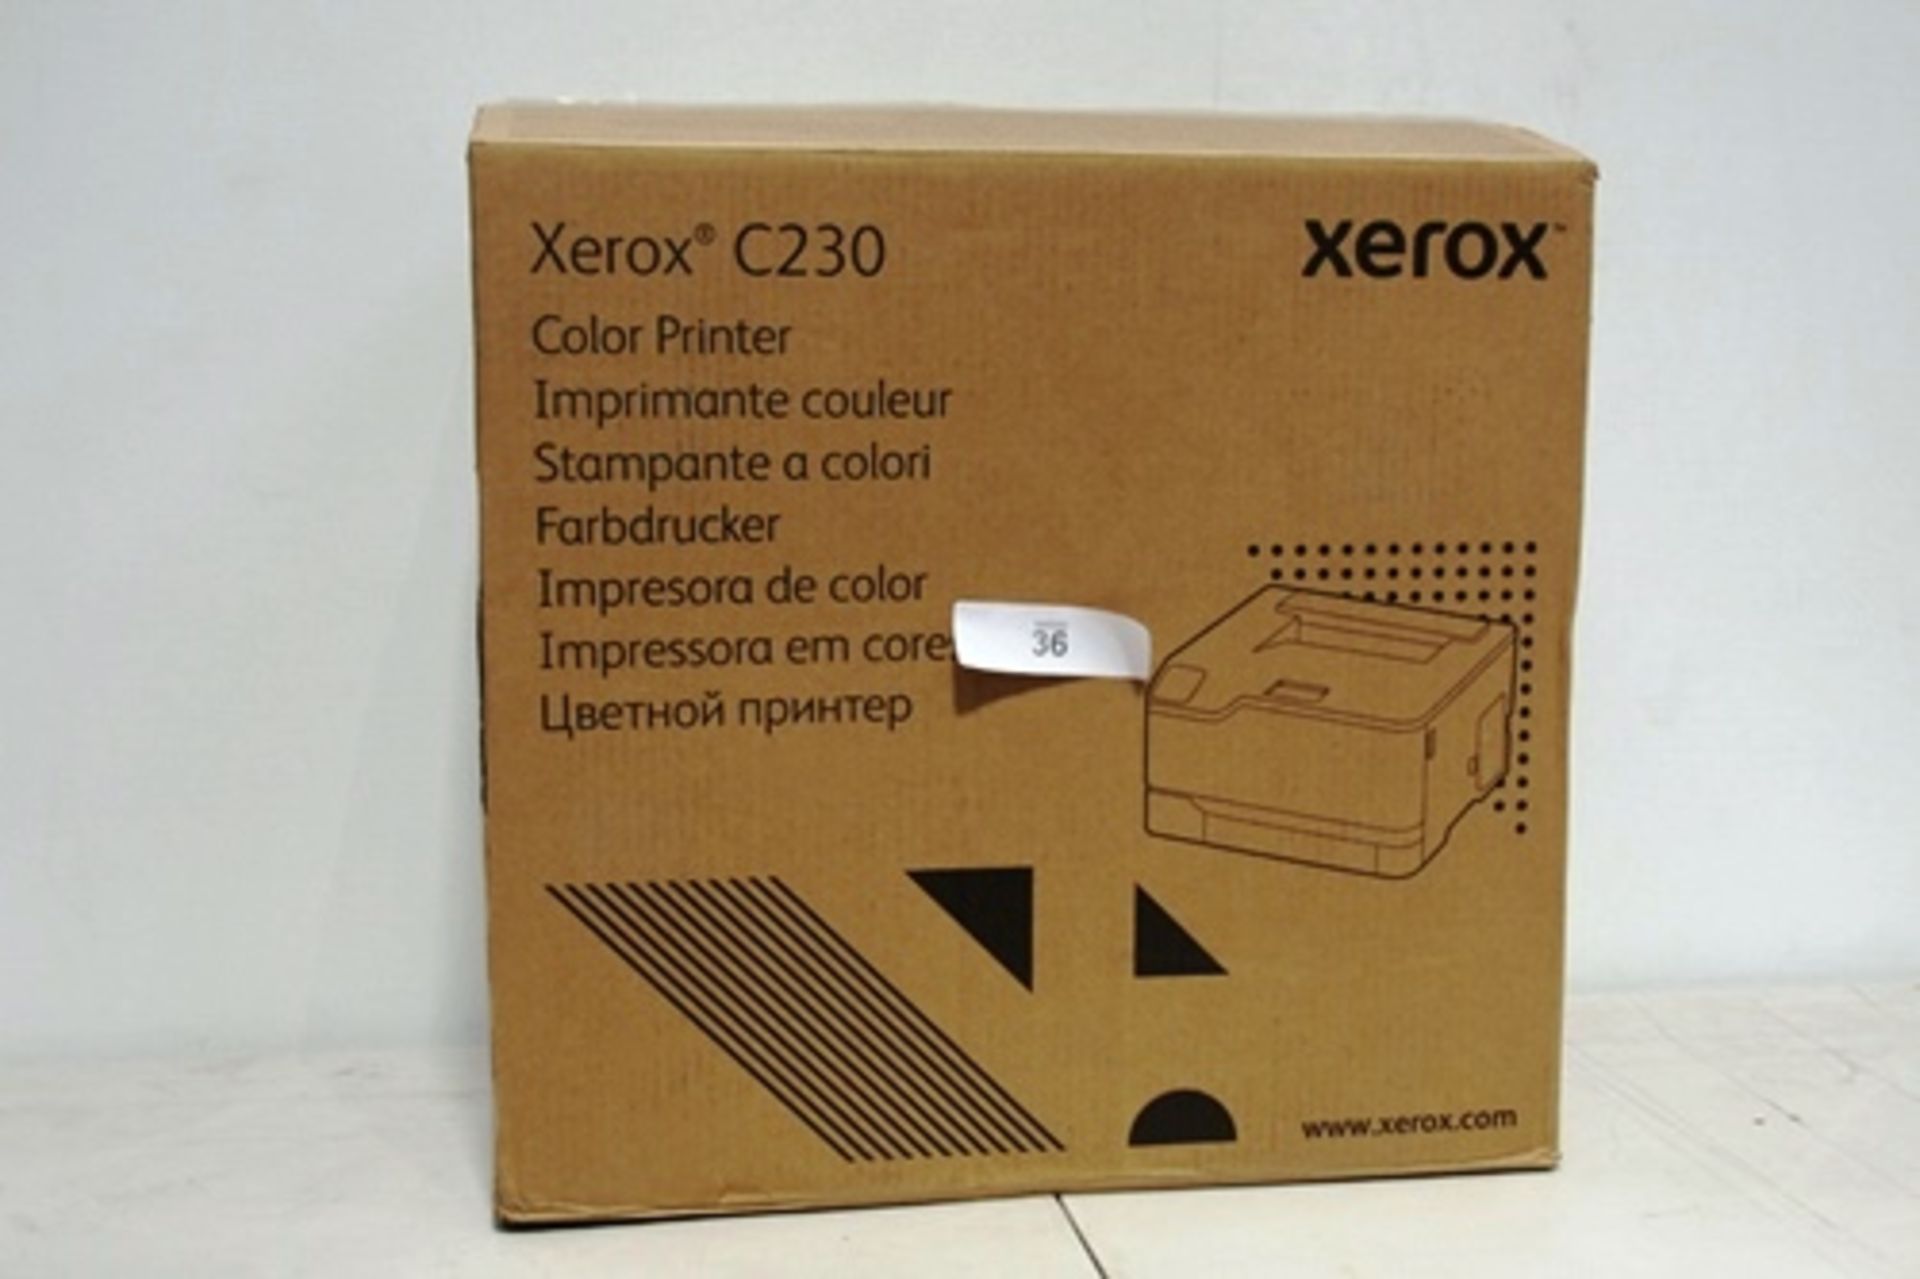 1 x Xerox C230 colour printer, model 100N03772 - New in box (ES8)